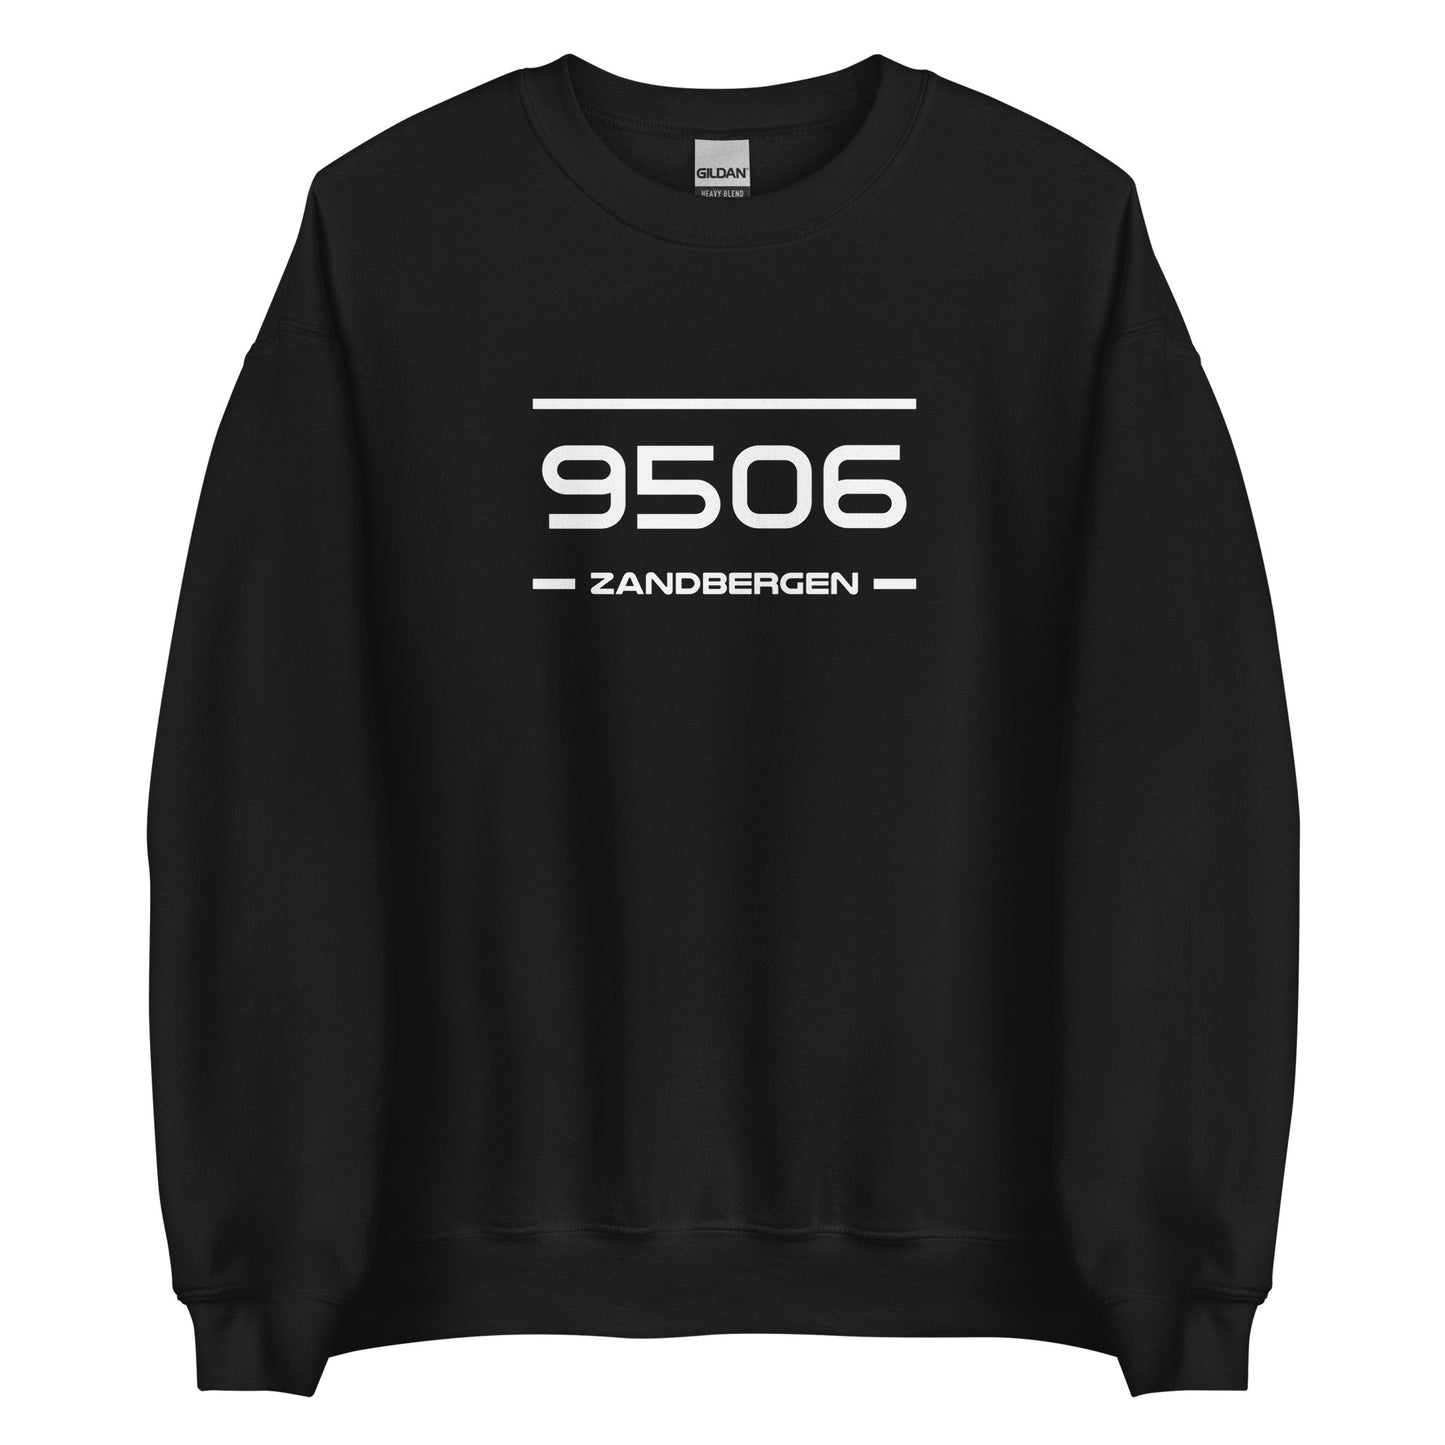 Sweater - 9506 - Zandbergen (M/V)